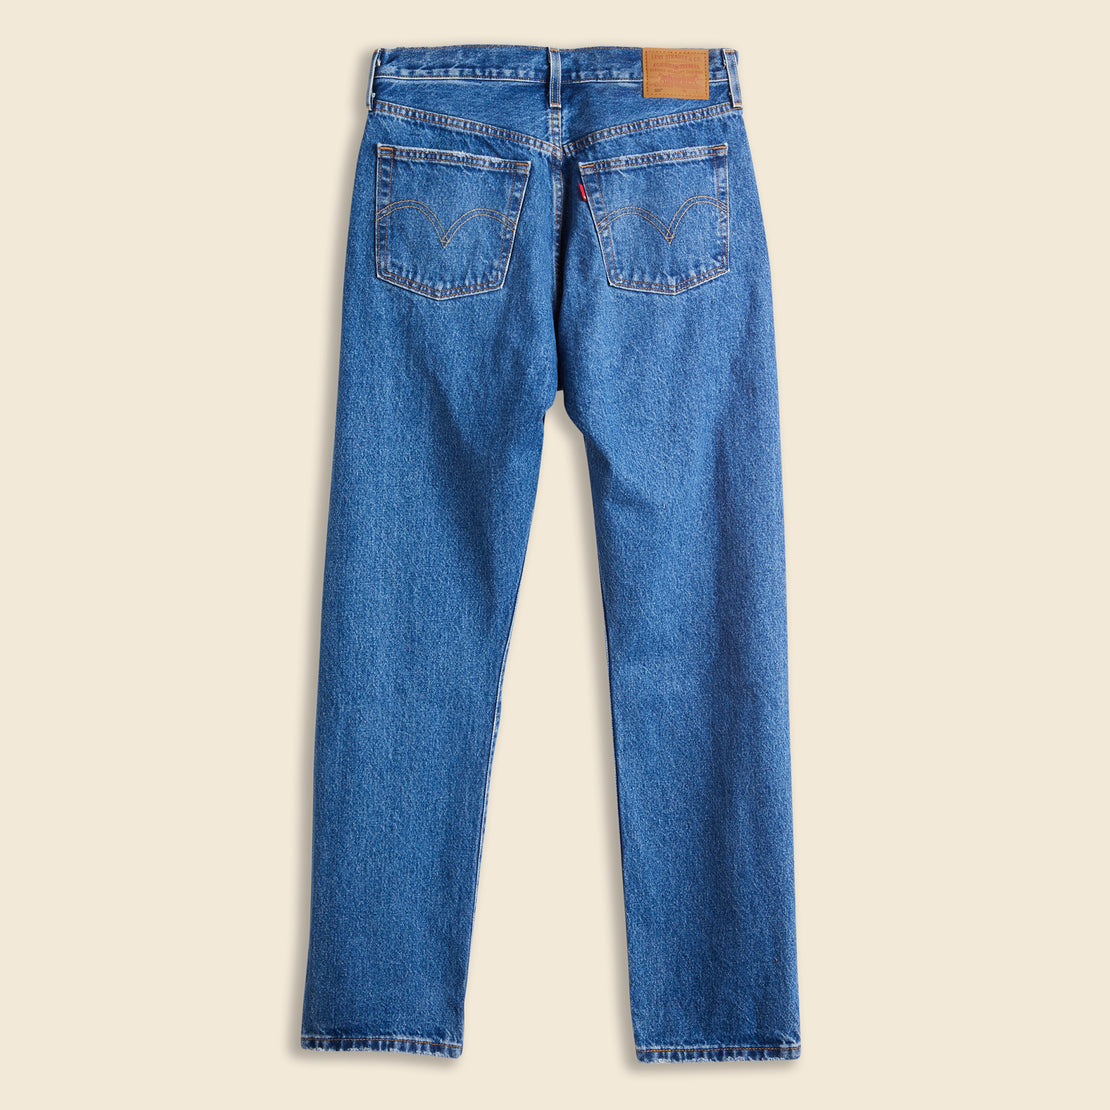 501 Jeans - Oxnard Athens Dark - Levis Premium - STAG Provisions - W - Pants - Denim